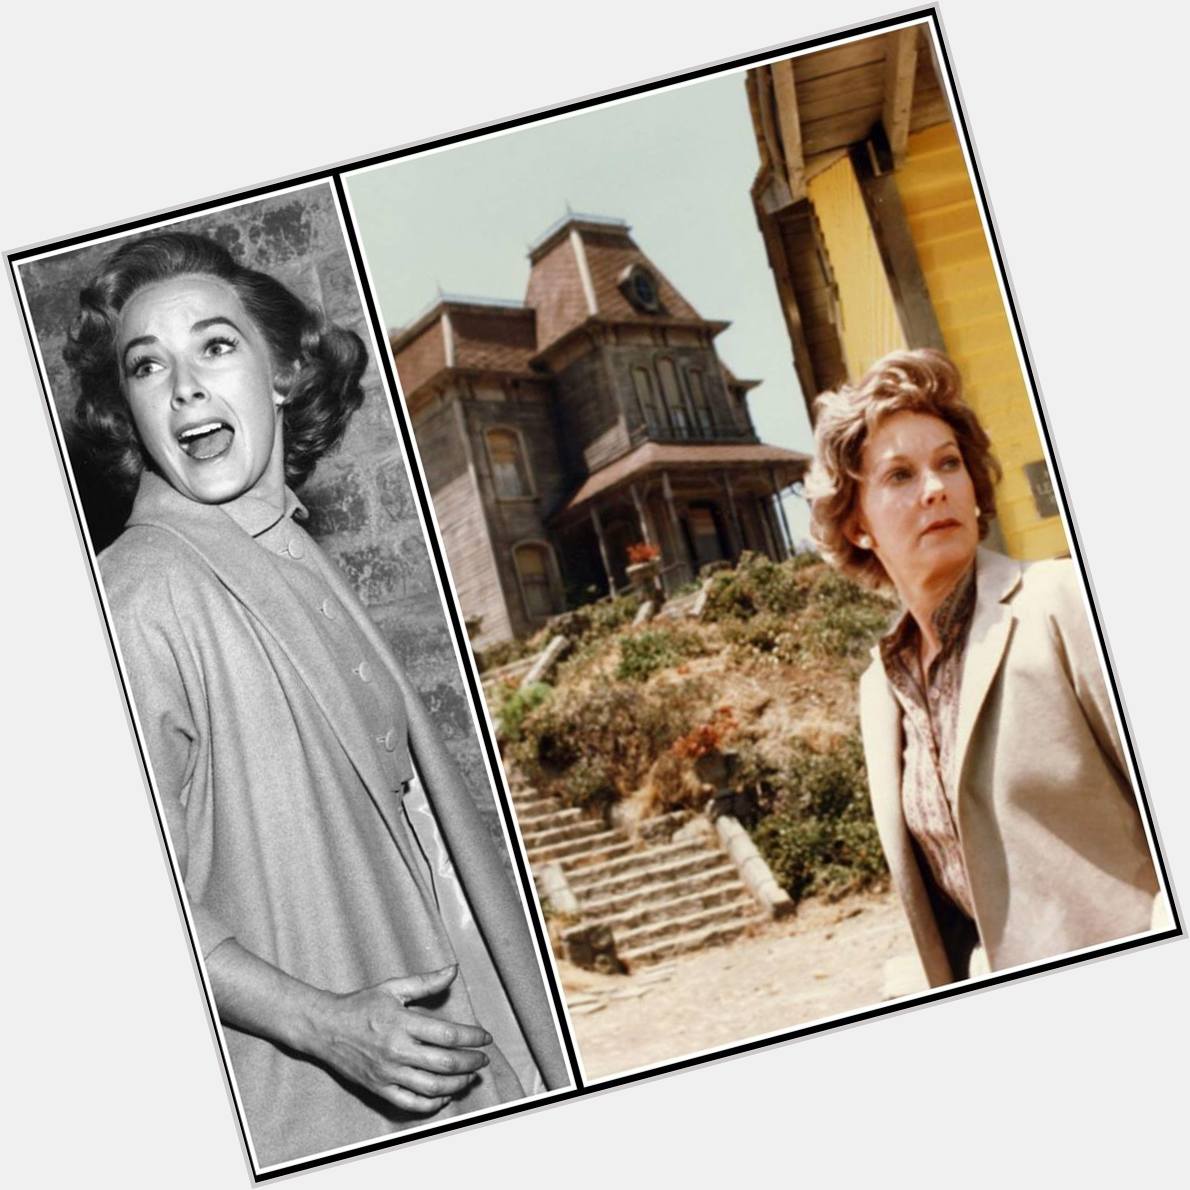 Vera Miles (born August 23, 1929)
Happy 89th Birthday
Photos: 
(L) Psycho (1960)
(R) Psycho II (1983) 